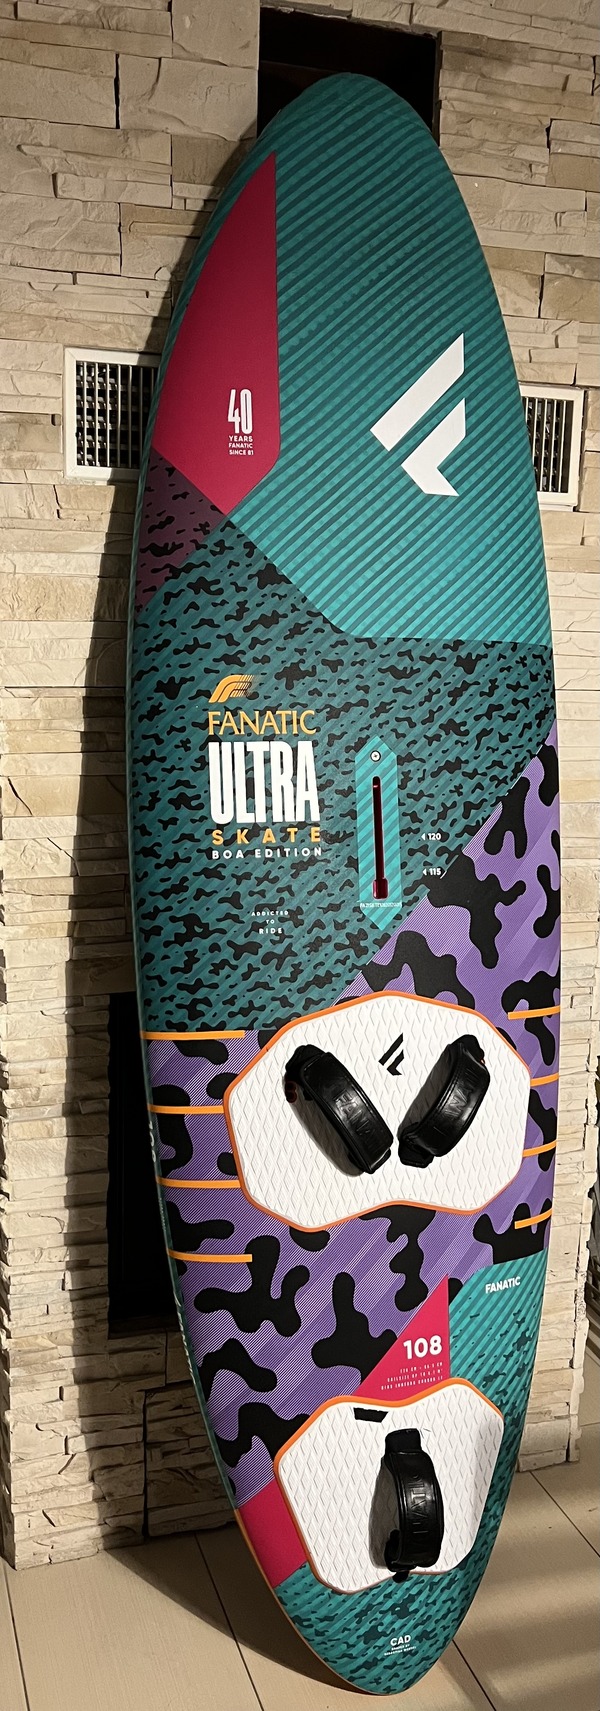 Fanatic - Ultra skate edition 